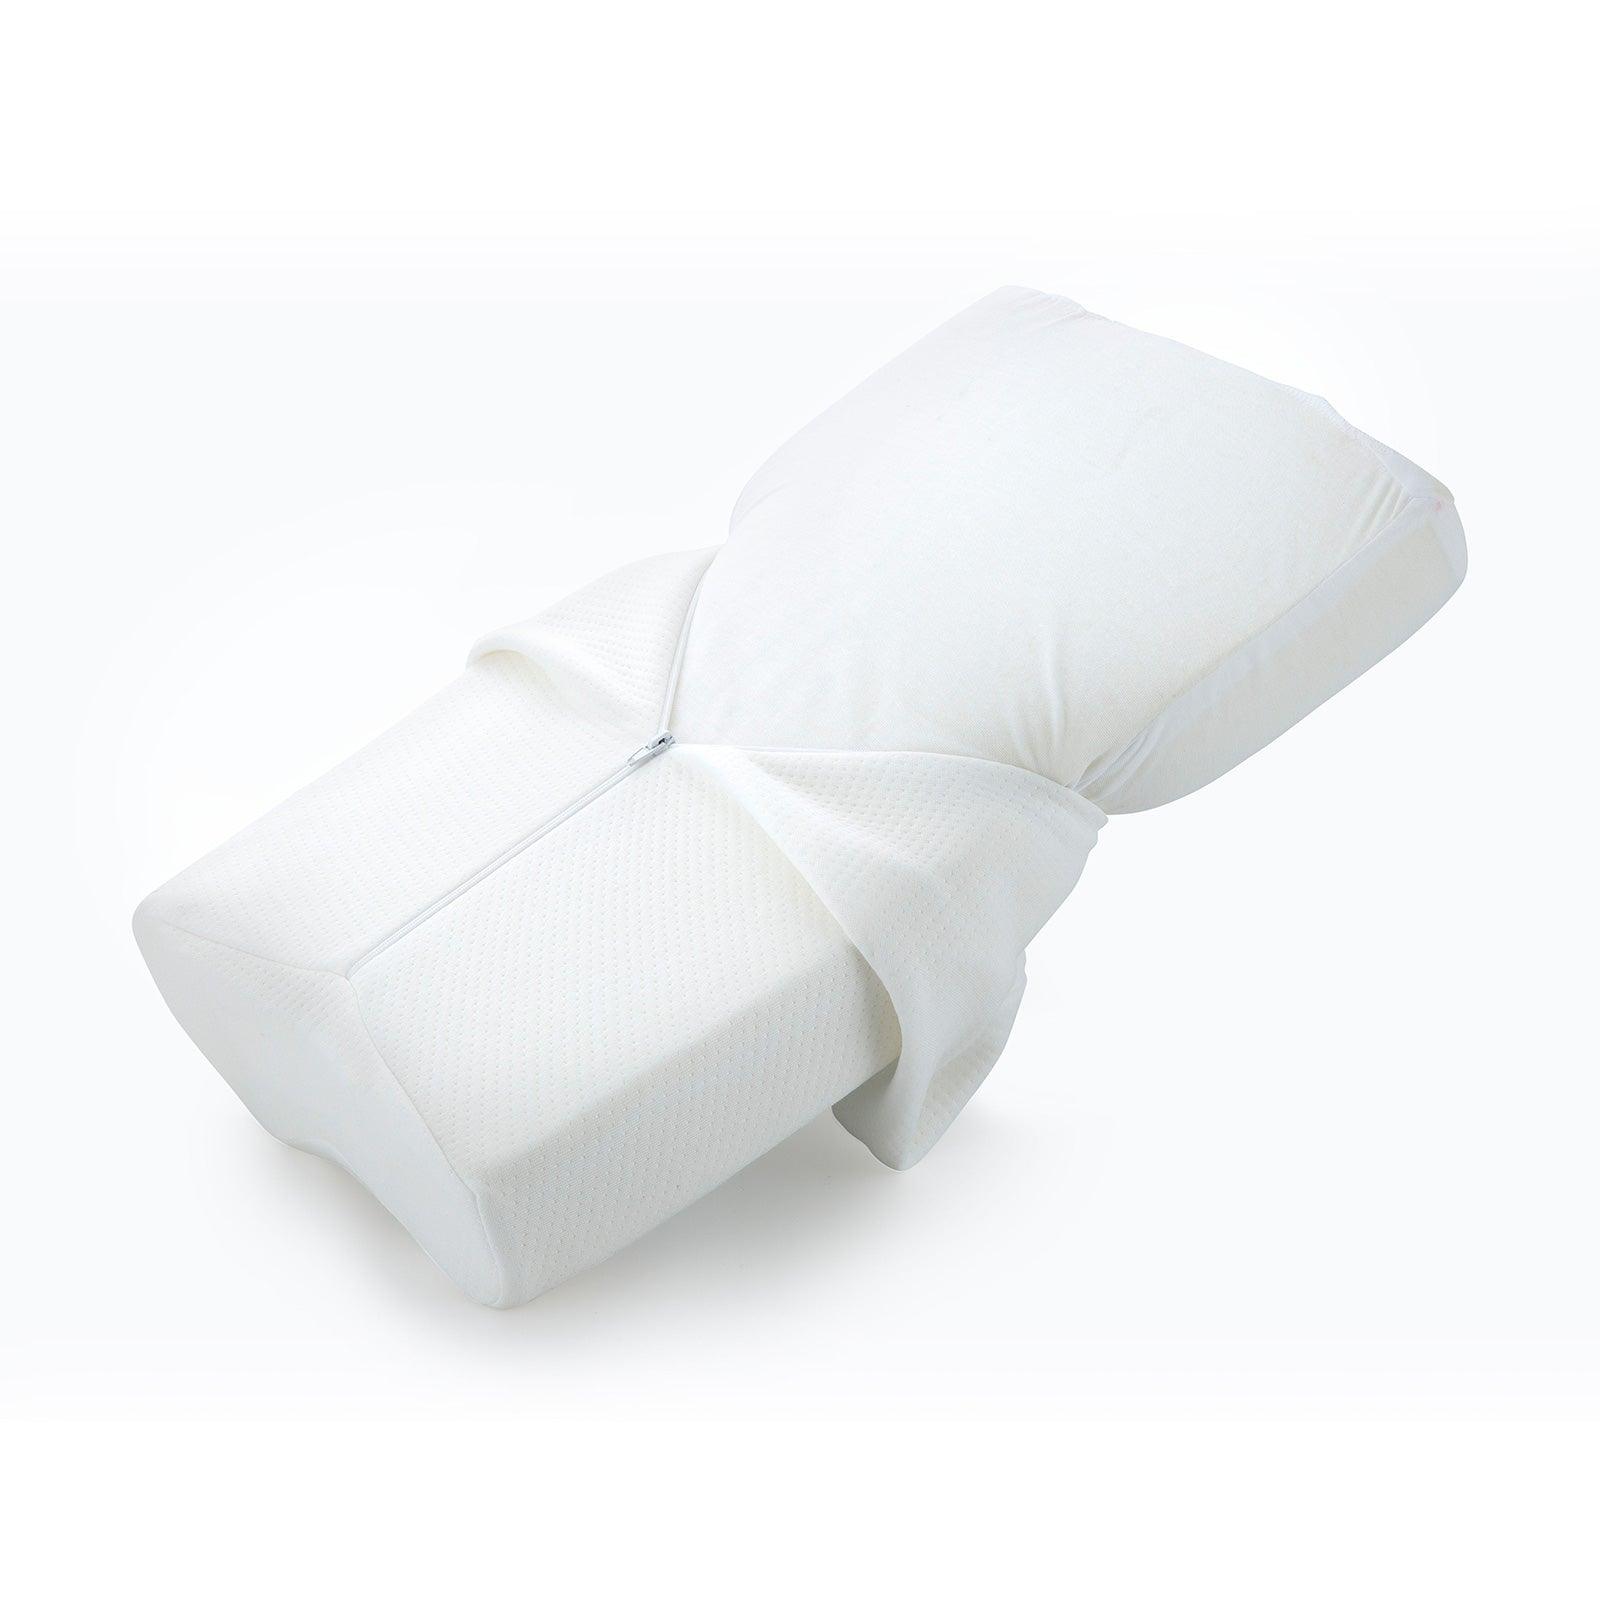 Royal Comfort Cooling Gel Contour High Density Memory Foam Pillow Single Pack